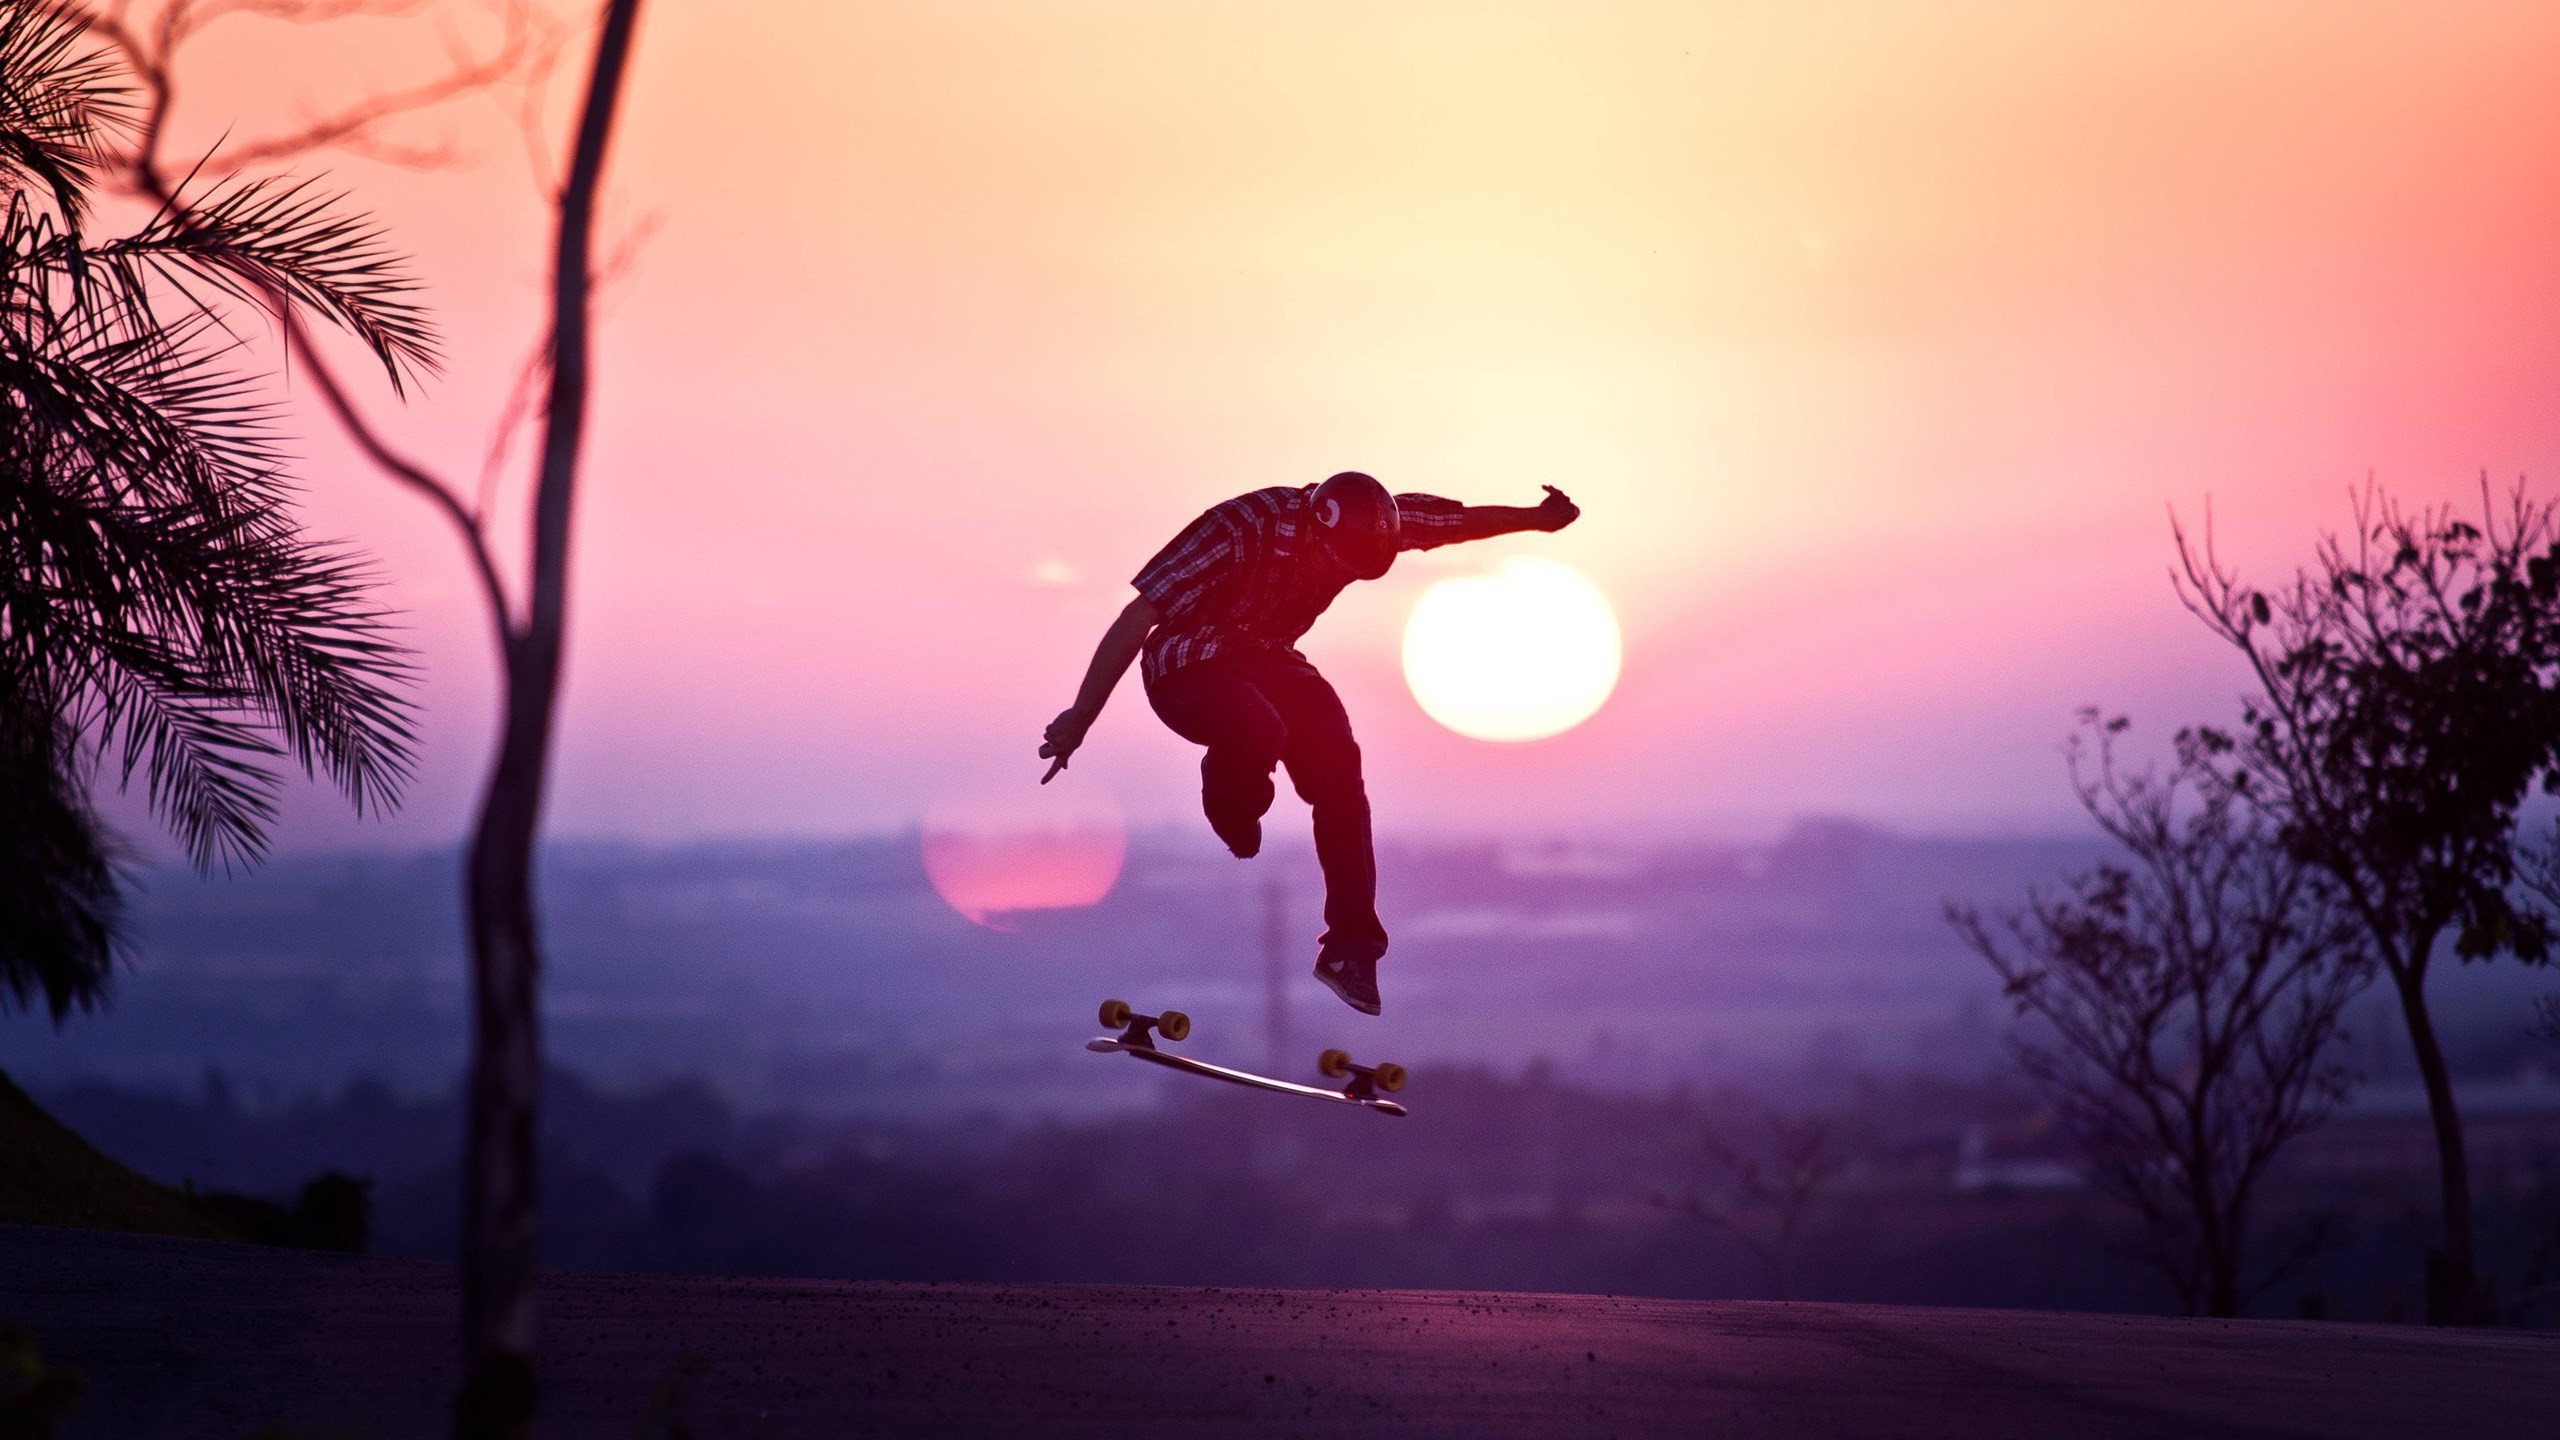 skate wallpaper,himmel,skateboard,skateboarding,longboard,extremsport